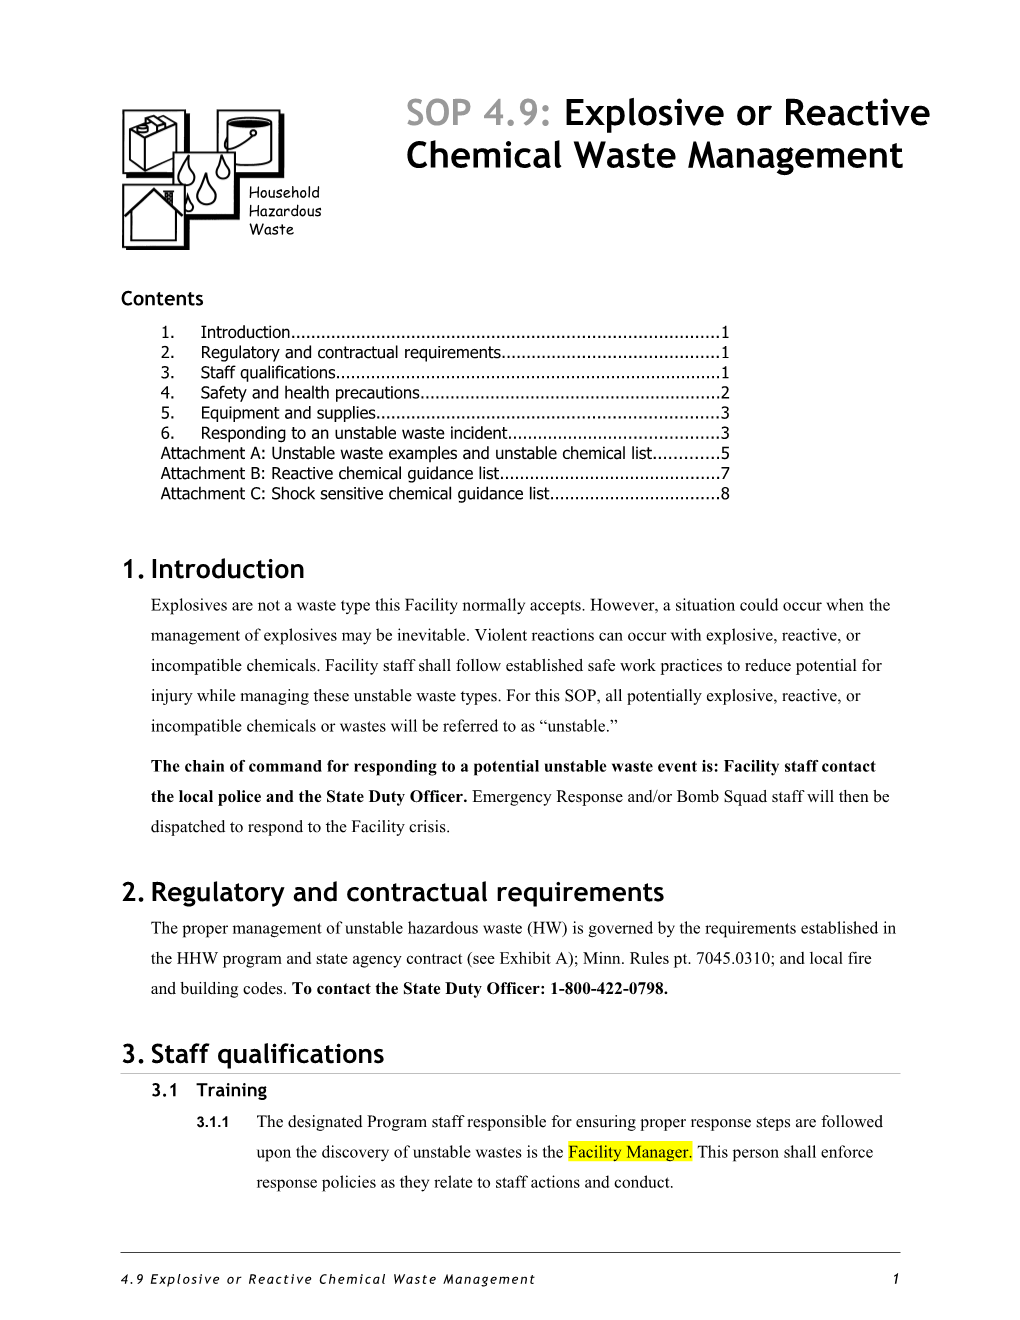 SOP 4.9 Explosive Or Reactive Chemical Waste Management